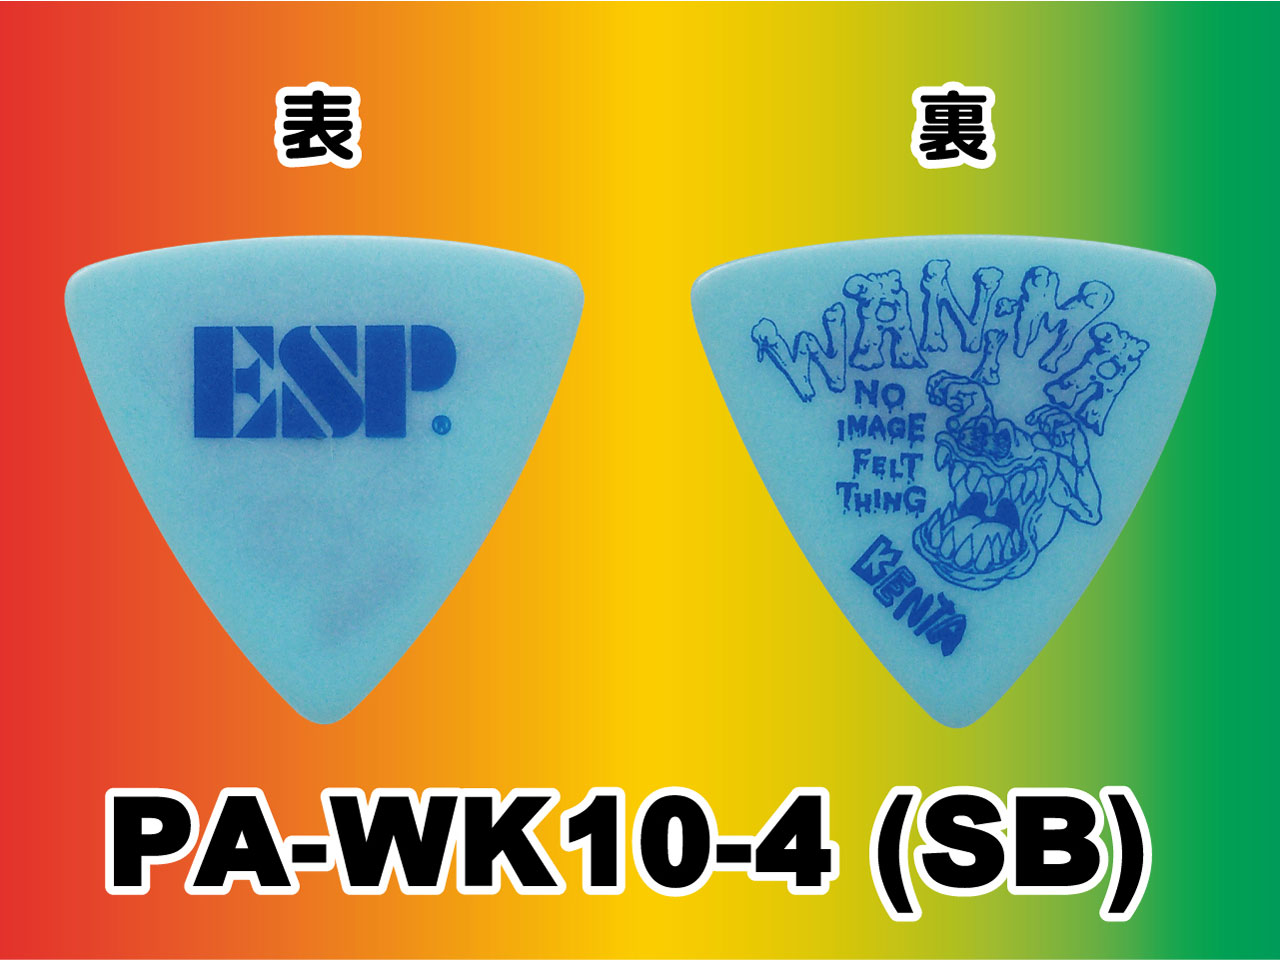 ESP(イーエスピー) Artist Pick Series PA-WK10-4 (WANIMA/KENTA Model)